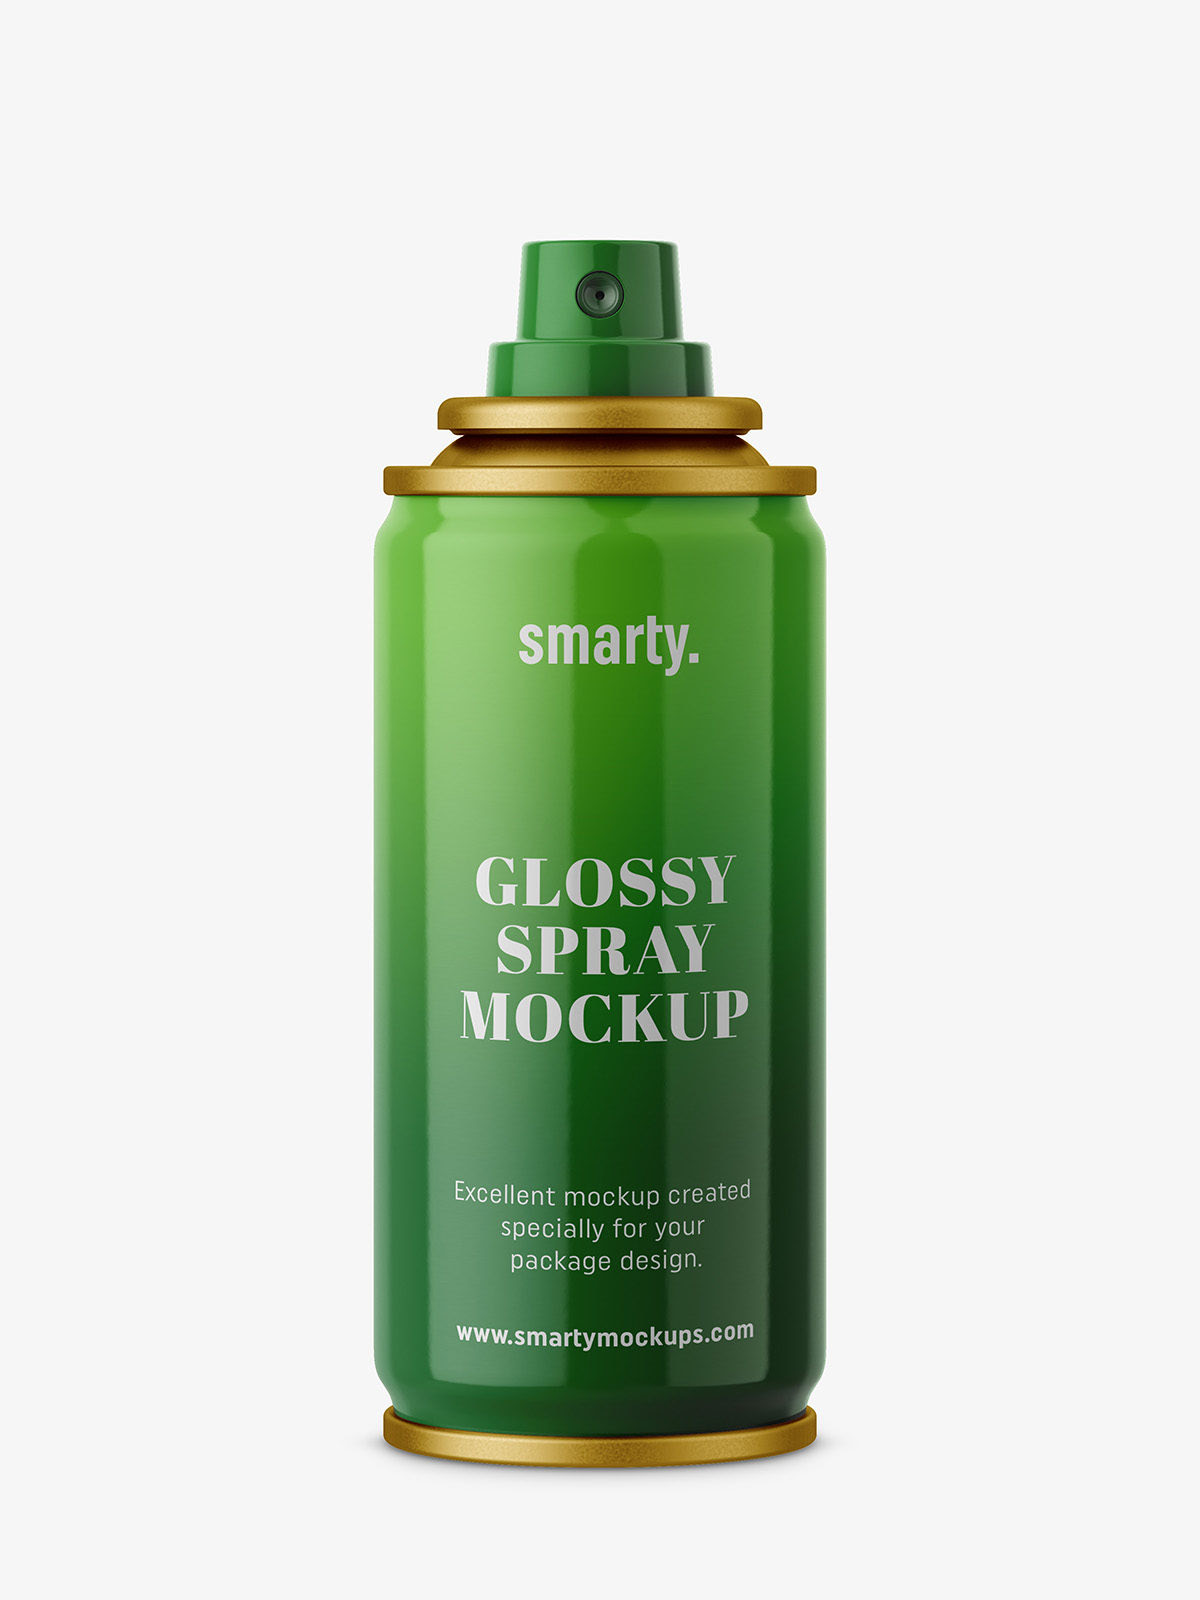 Glossy spray mockup Smarty Mockups